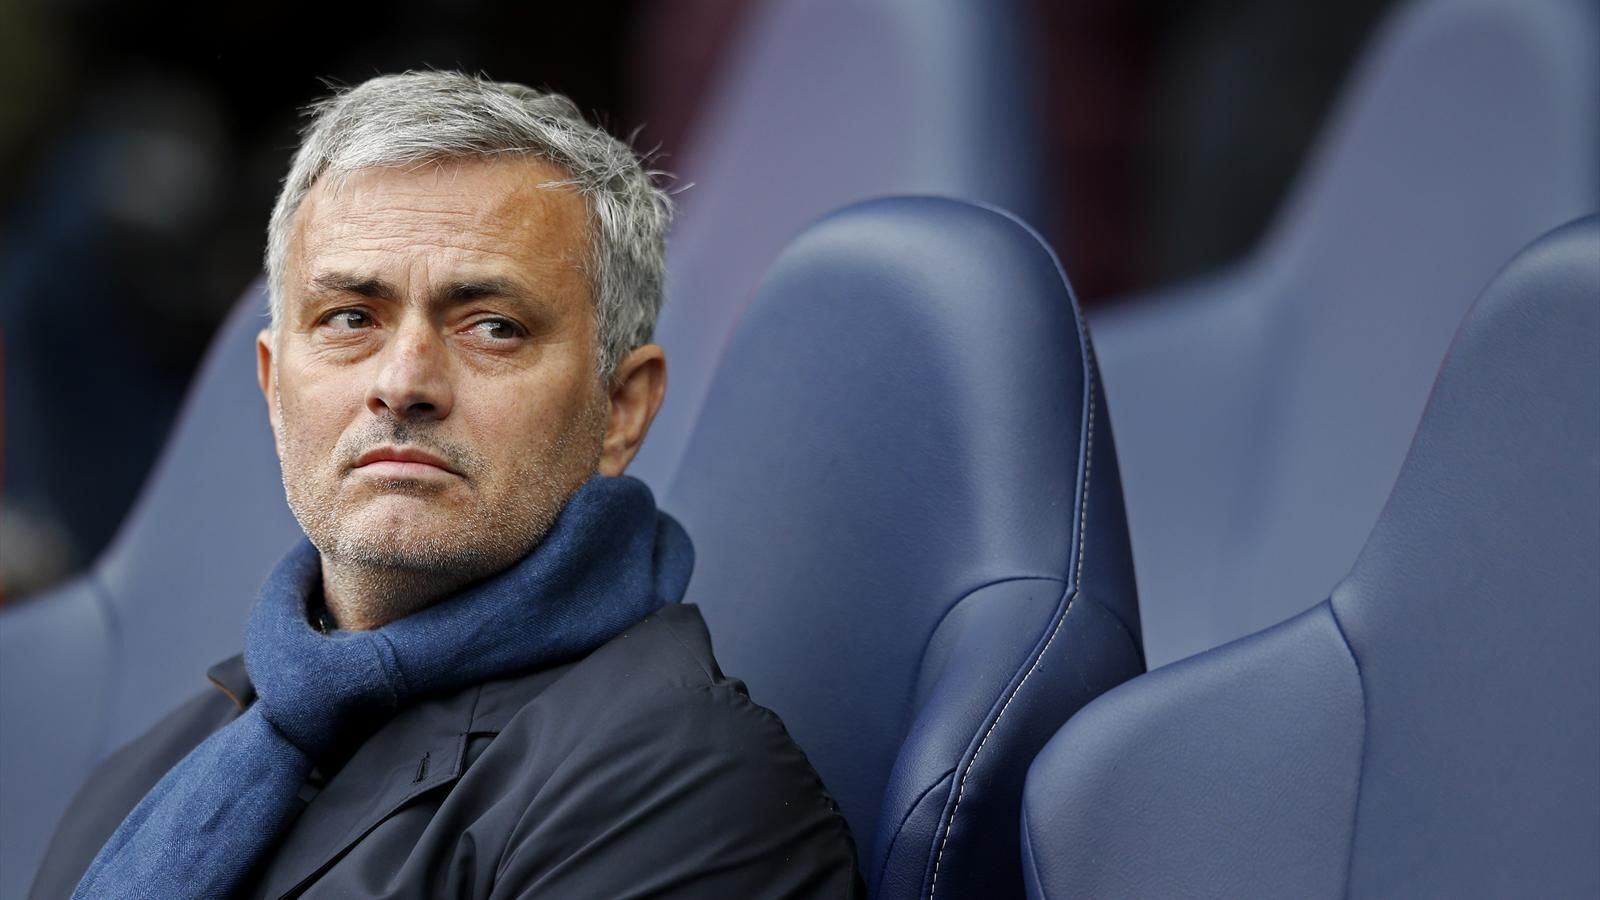 Jose Mourinho complained he had no bench to react